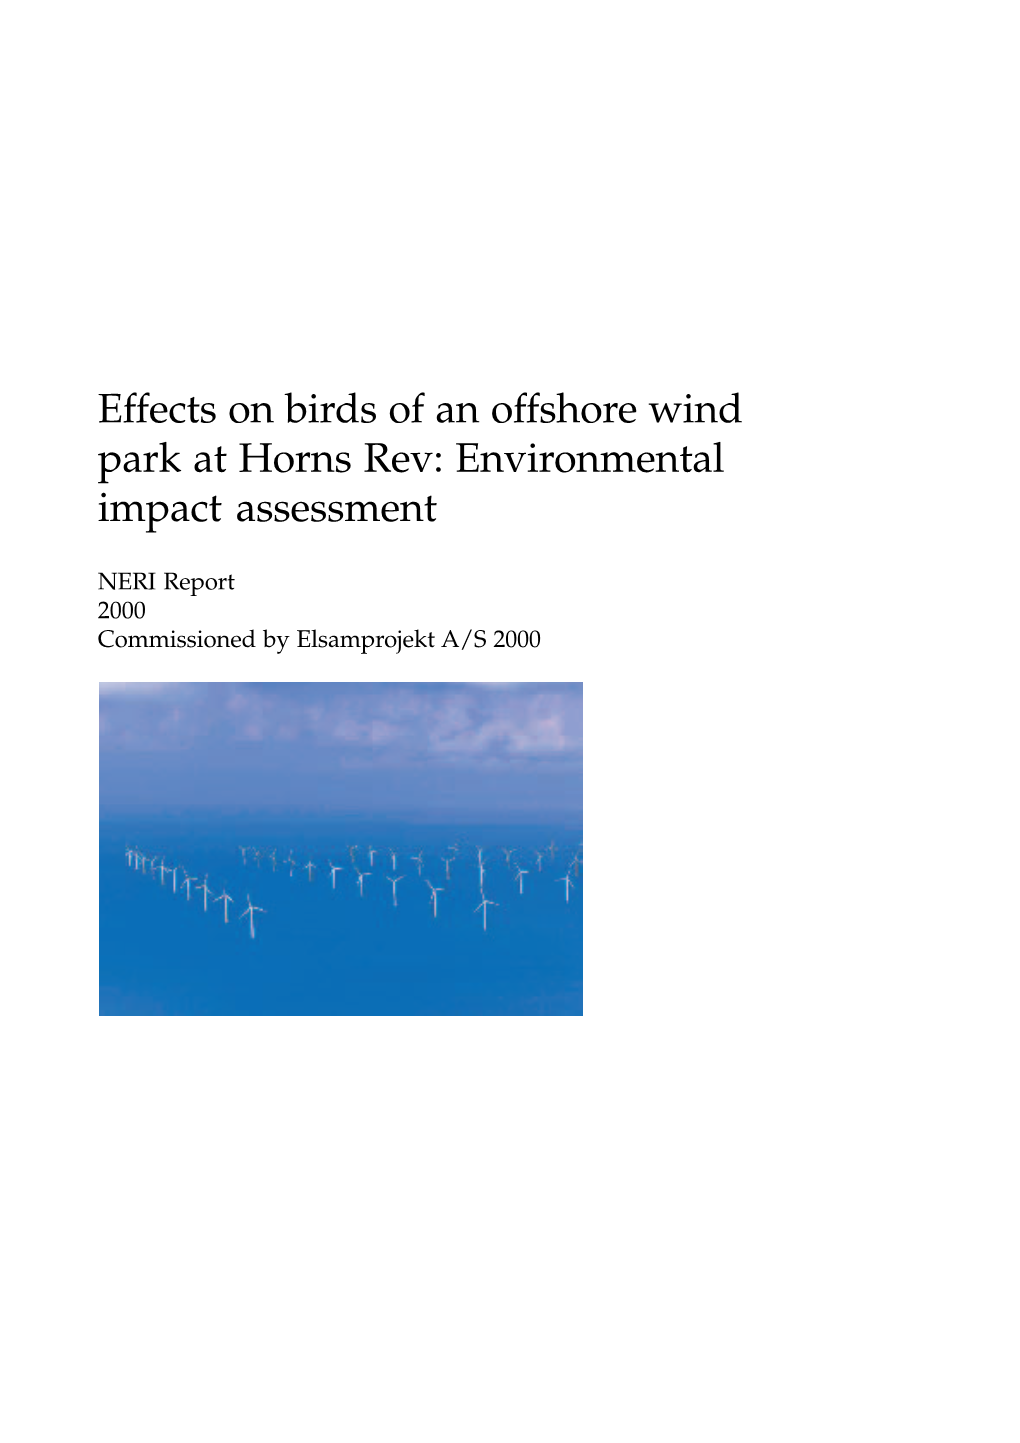 Effecst on Birds of an Offshore Wind Park at Horns